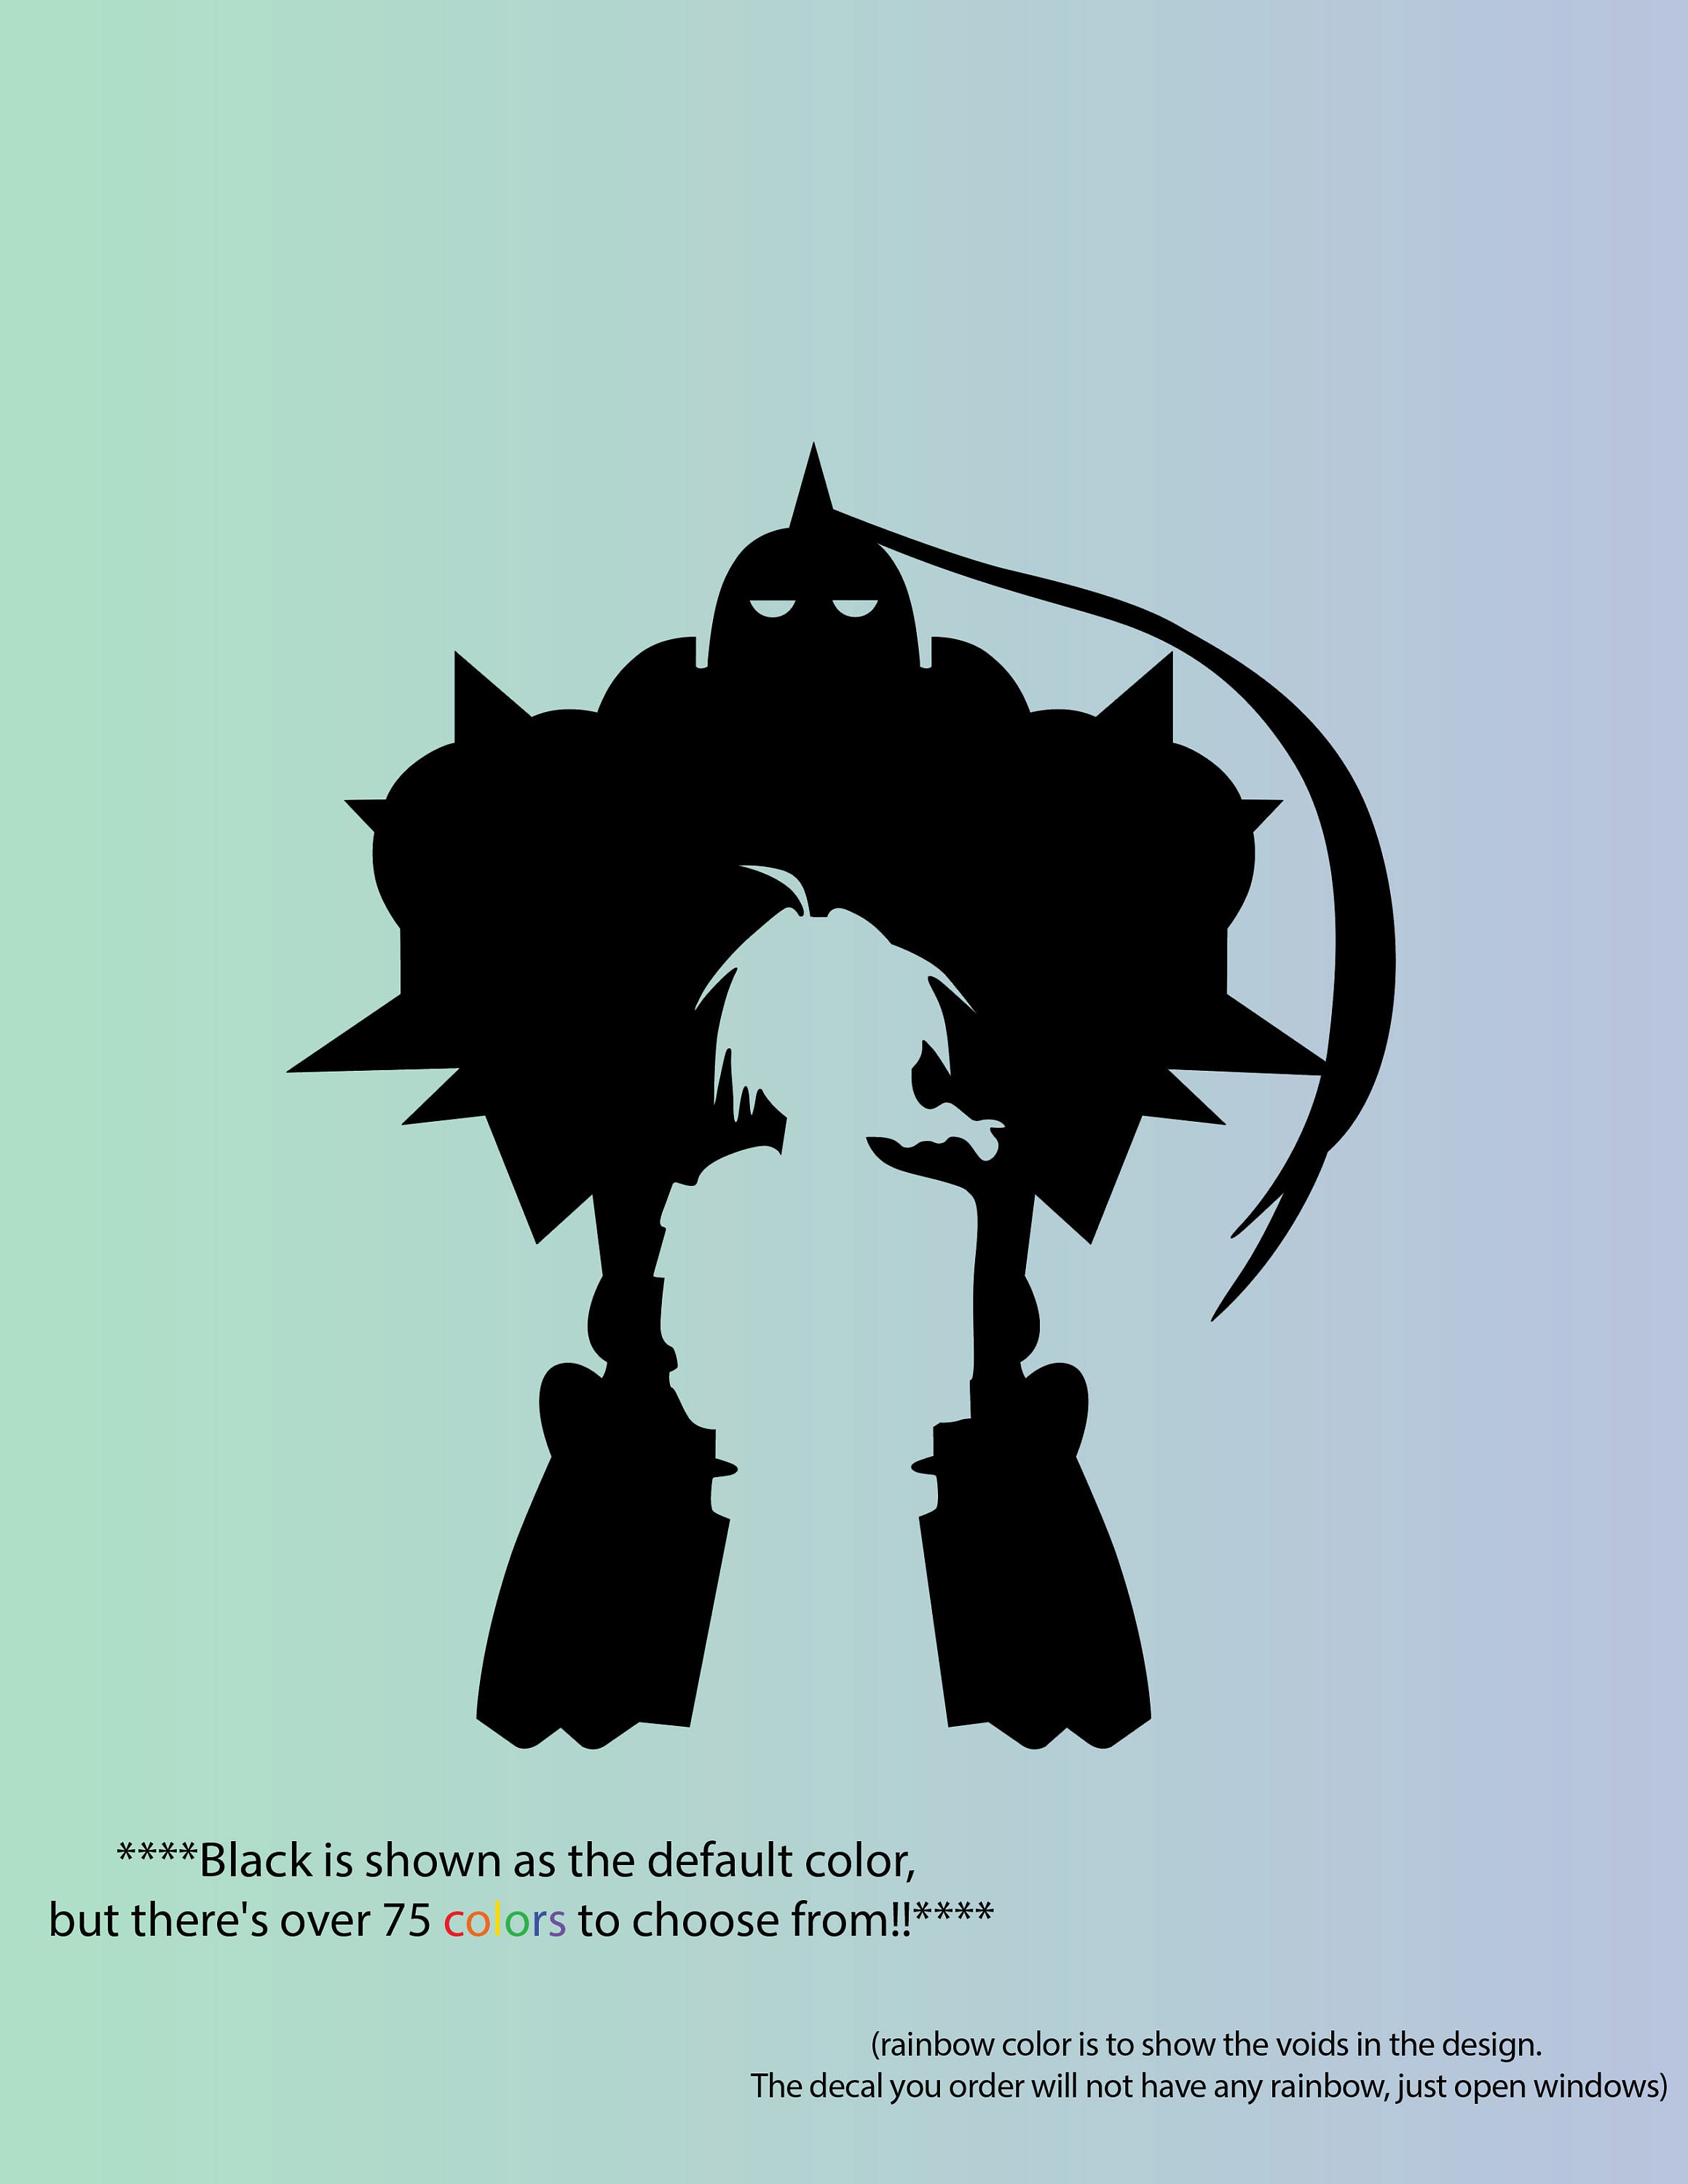 Fullmetal Alchemist brotherhood Anime Car Window Decal Sticker E002